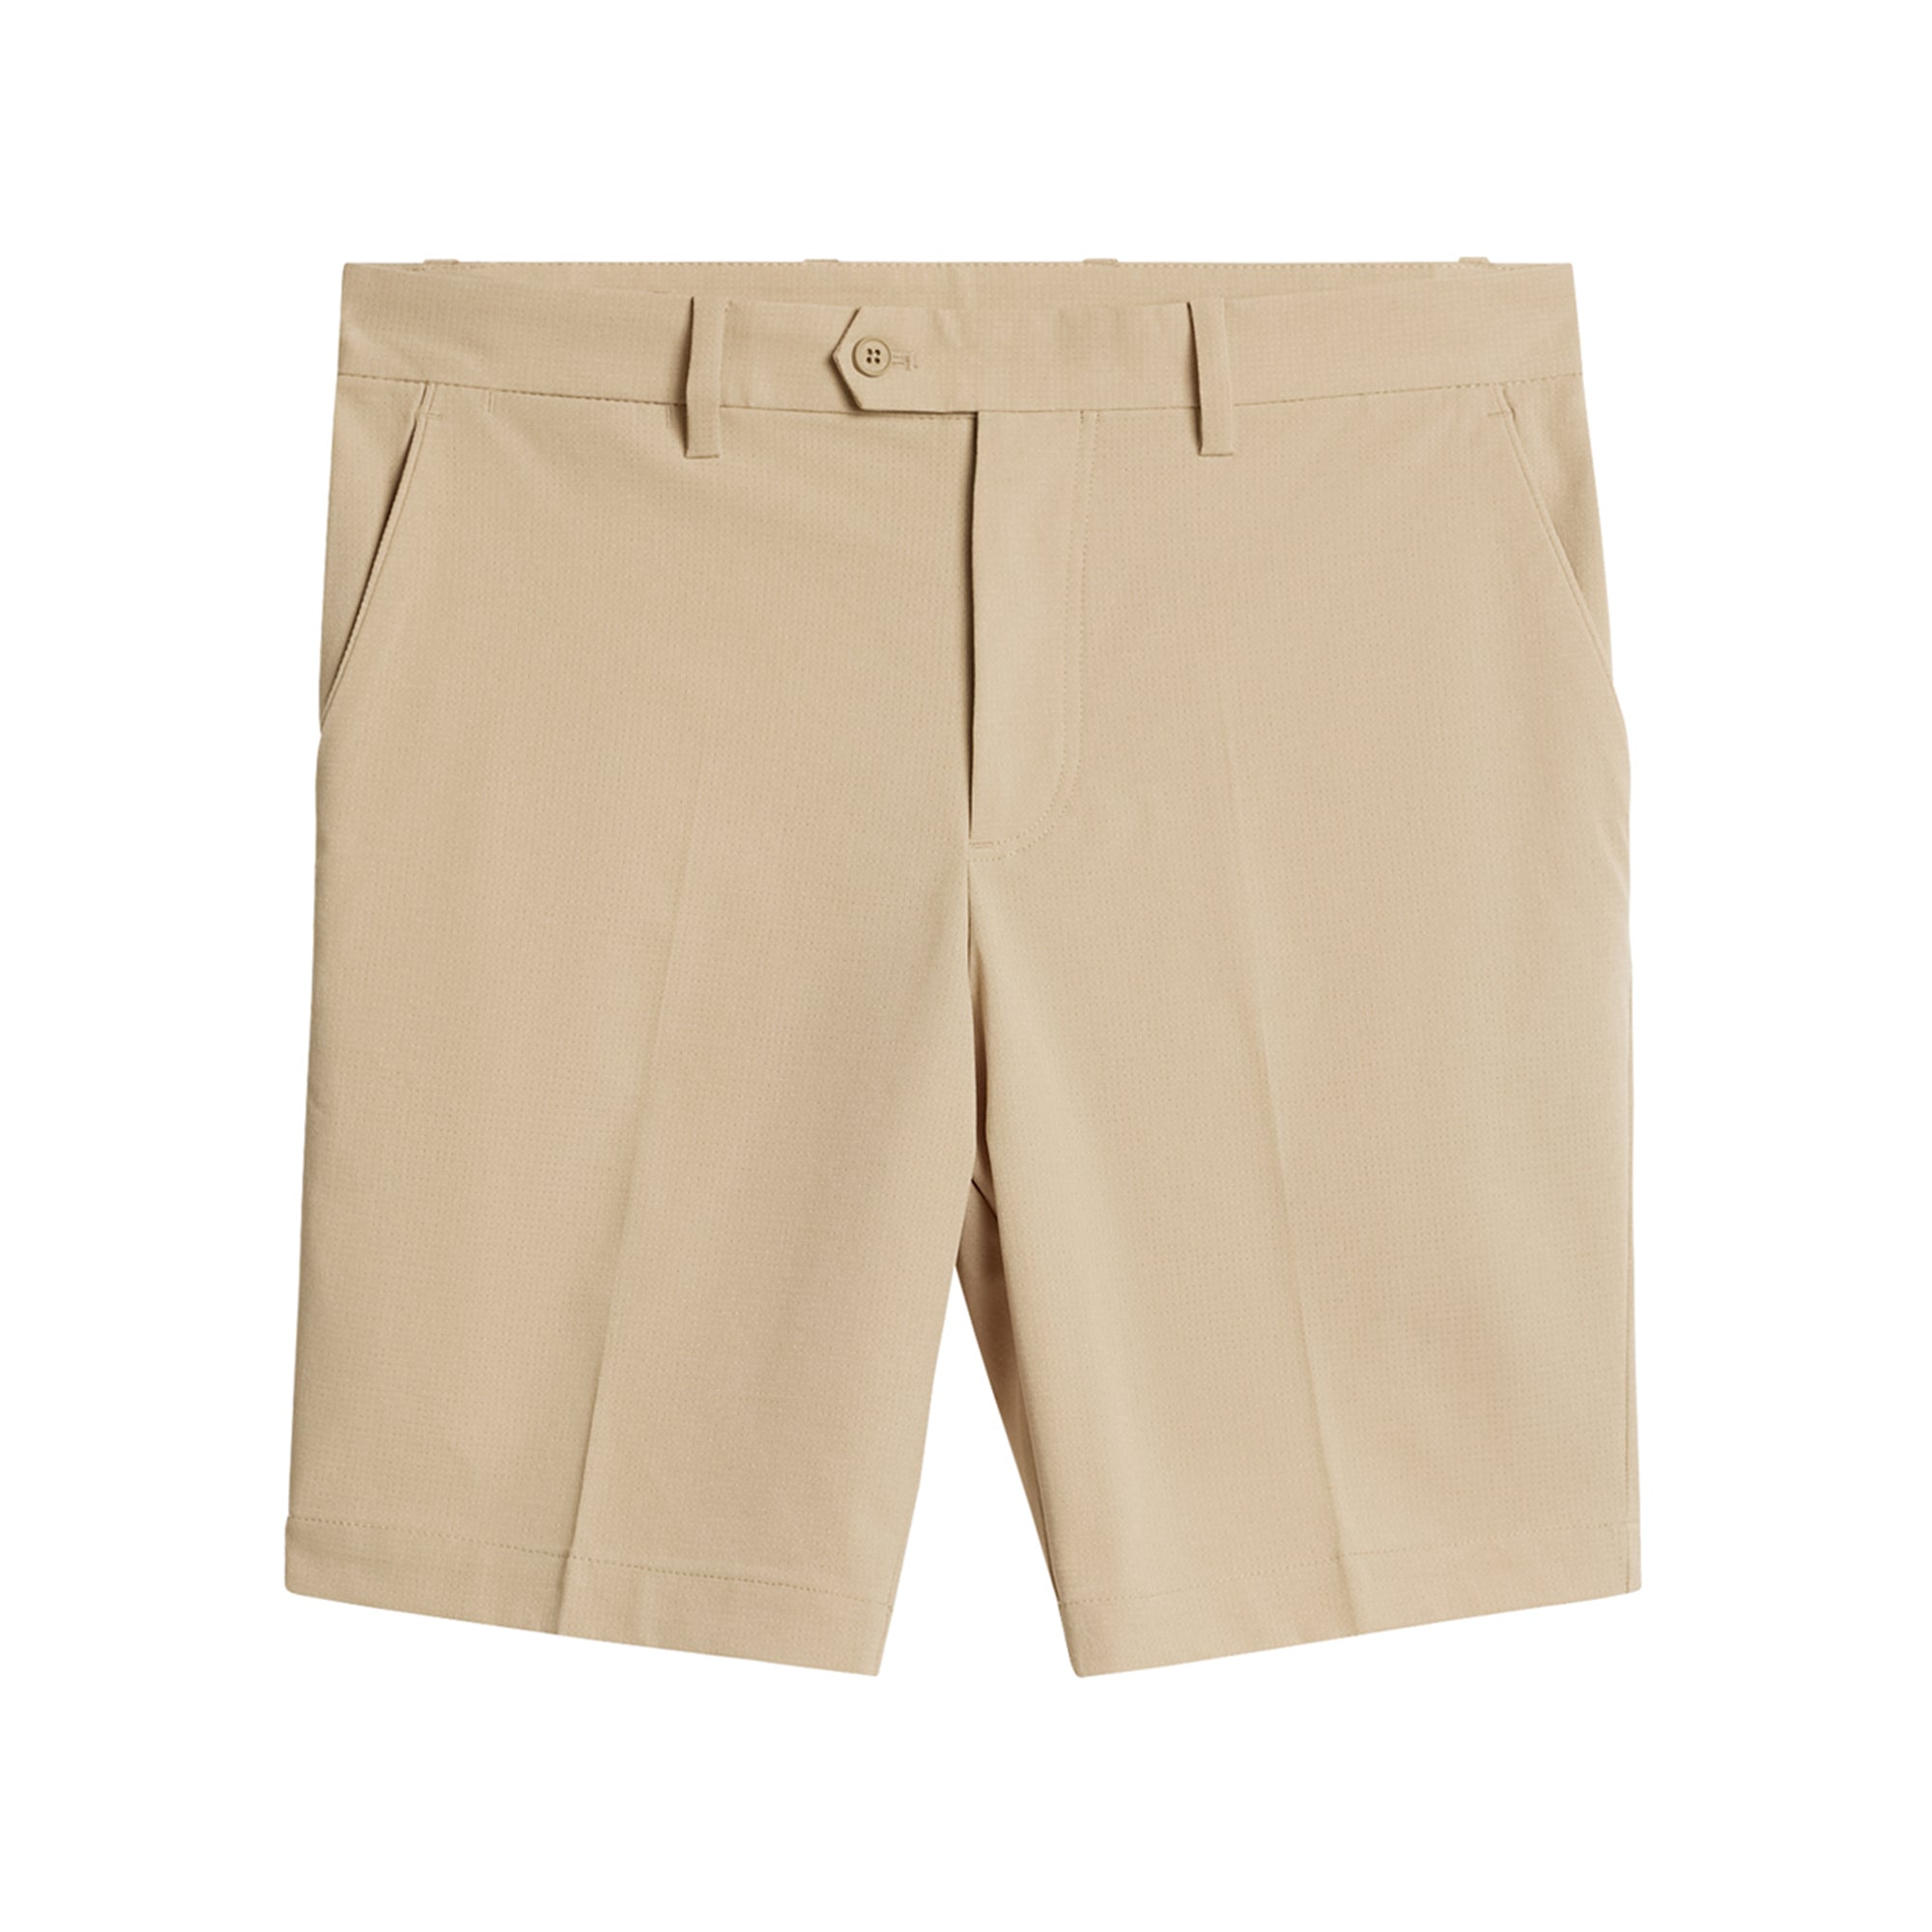 j-lindeberg-golf-vent-tight-shorts-gmpa09698-1679-safari-beige